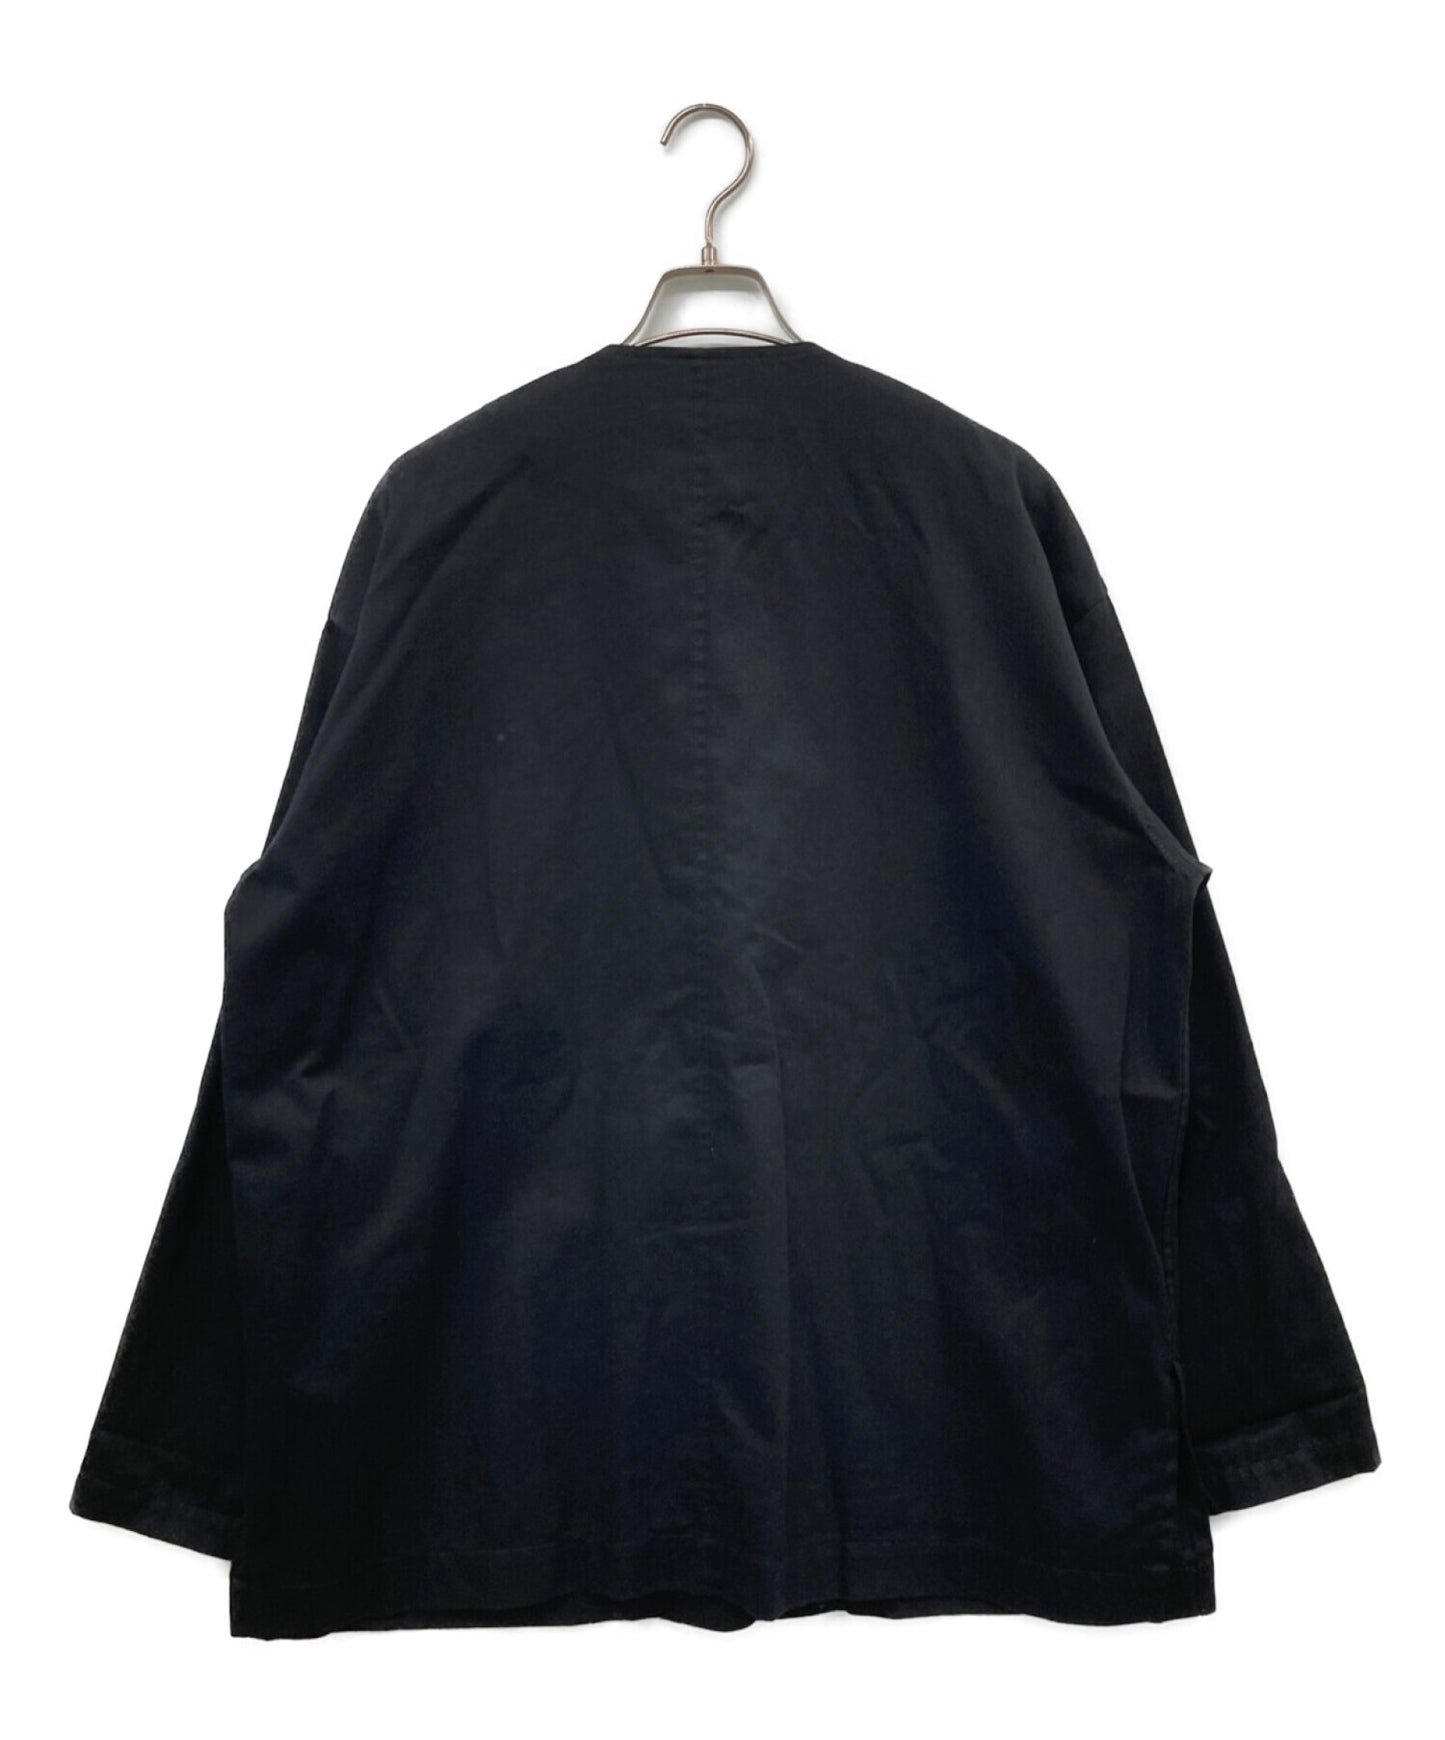 S'yte 18AW中国衬衫夹克UV-B58-076